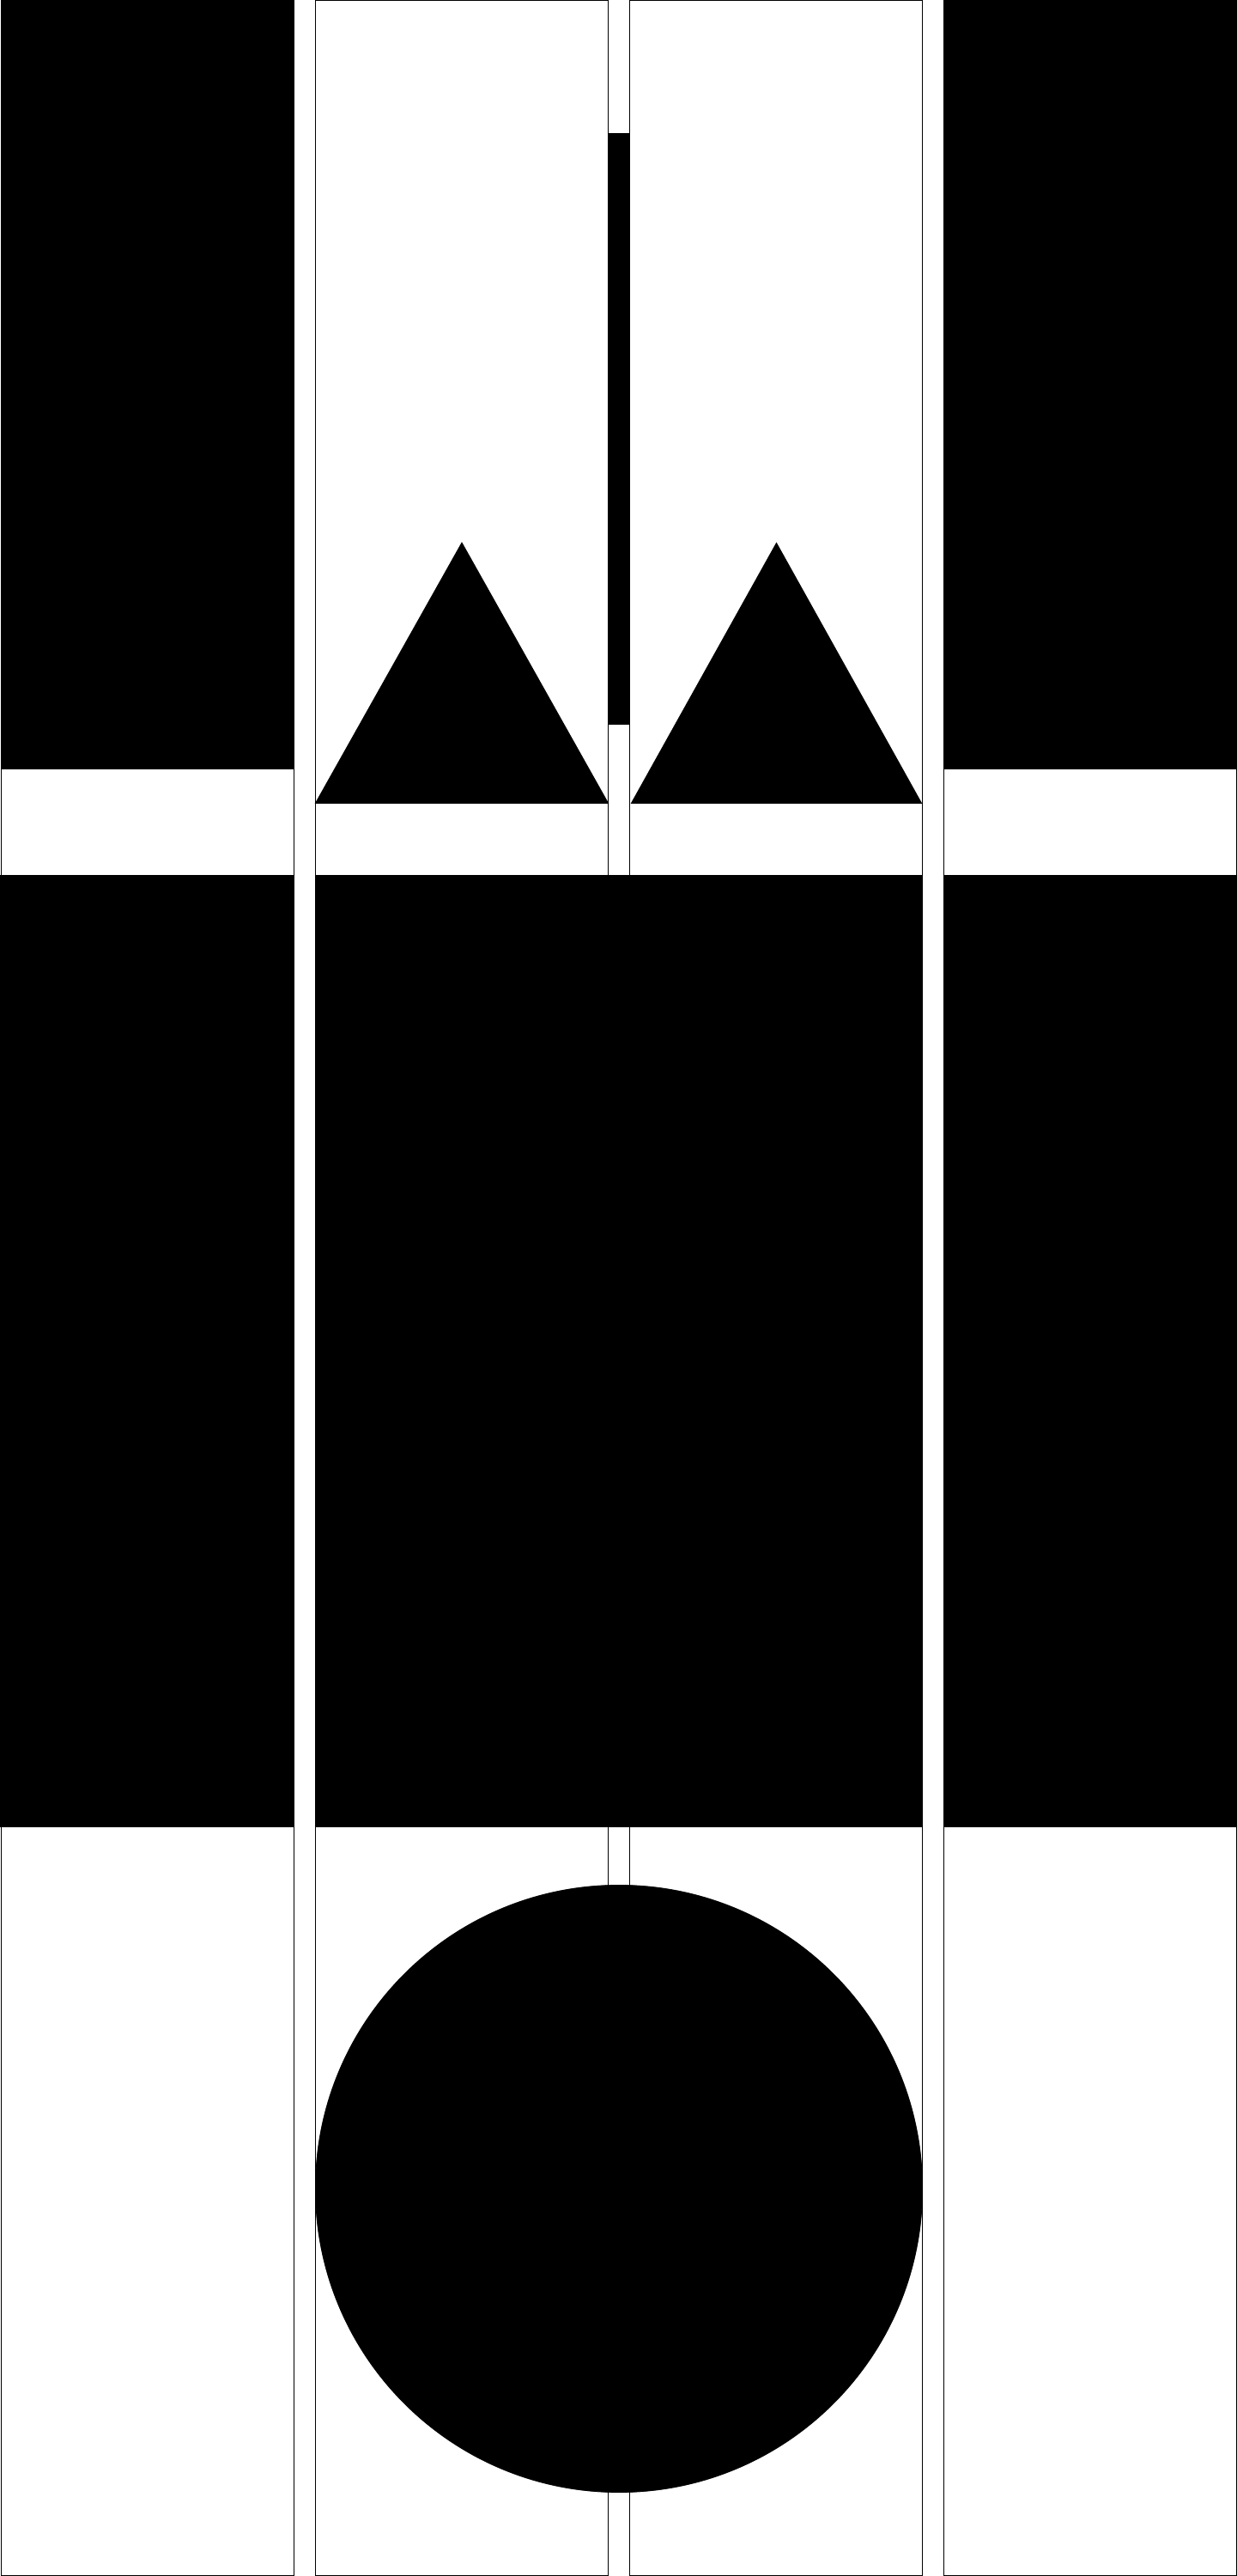 shape layout p5